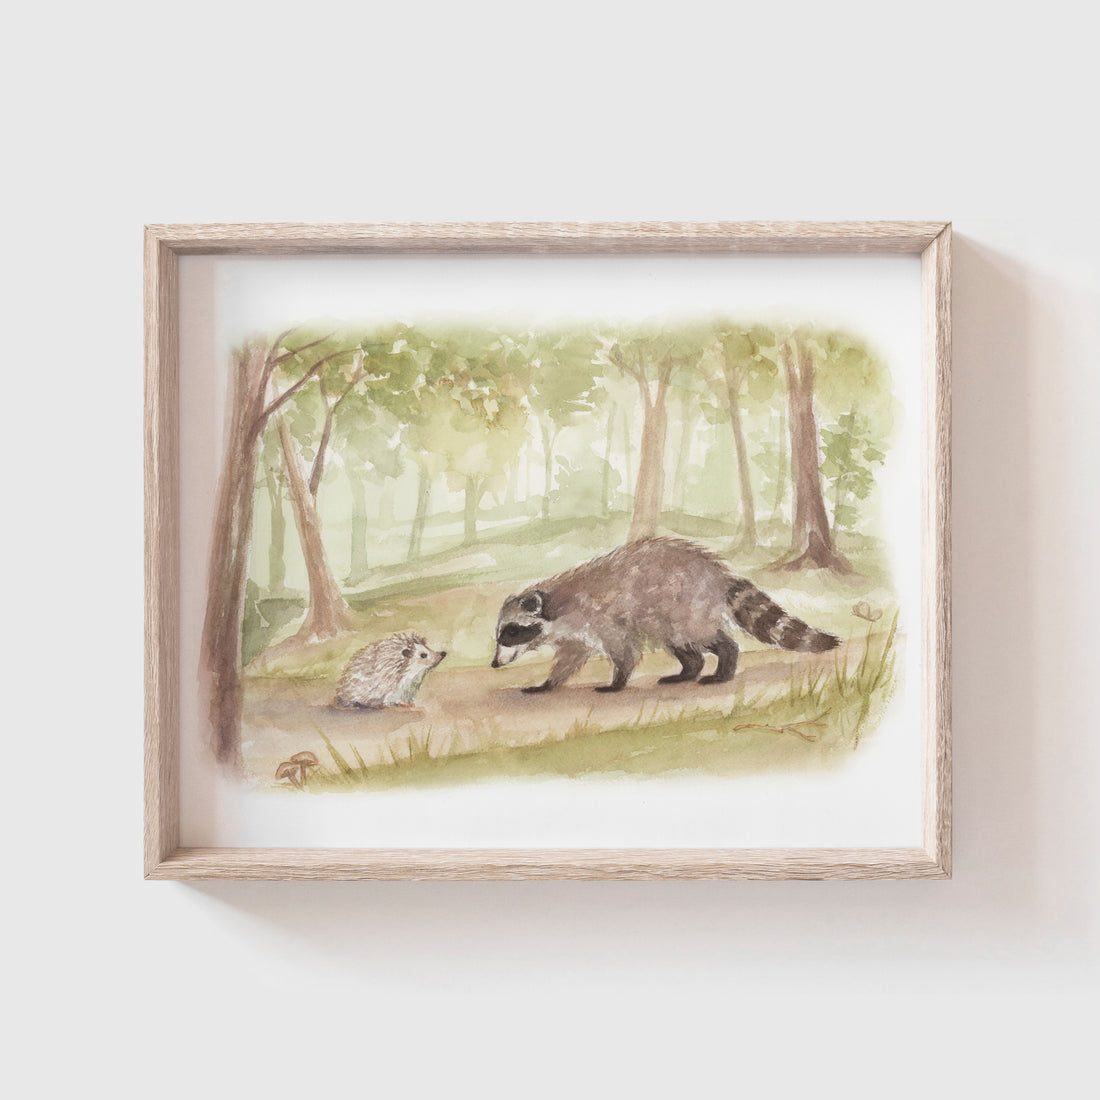 'Hedgehog Meets Raccoon' Art Print (Our Little Adventures)